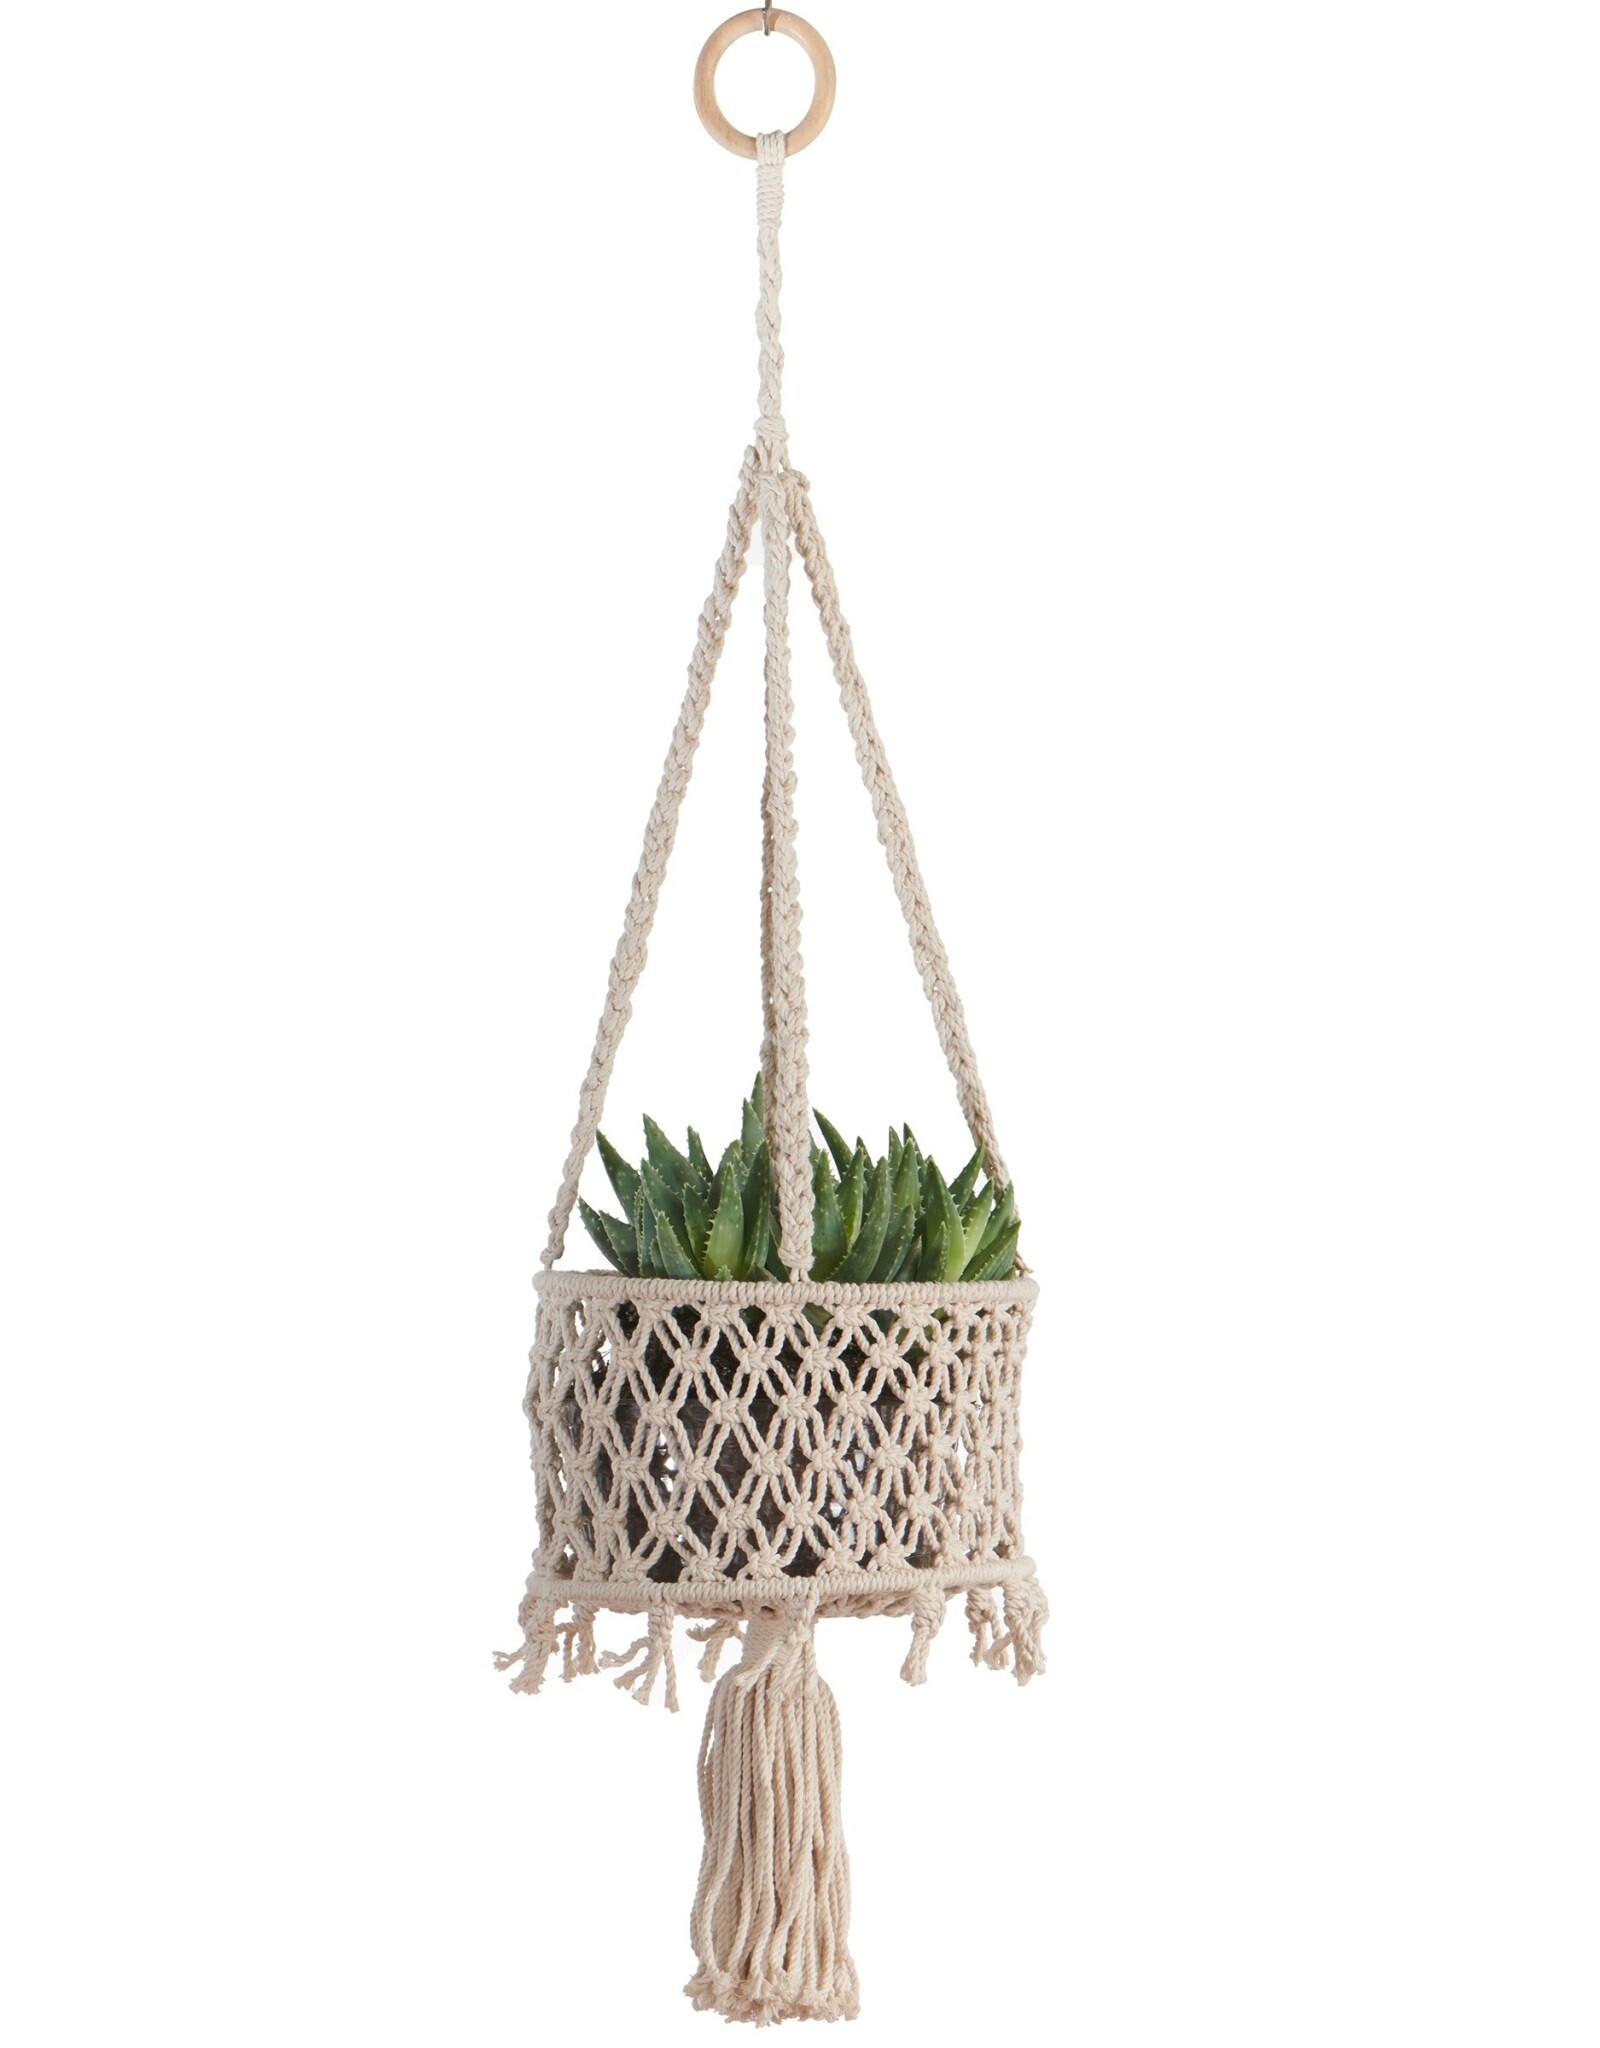 Primitive Planters® Hanging Utility Basket  - 34in - Cotton